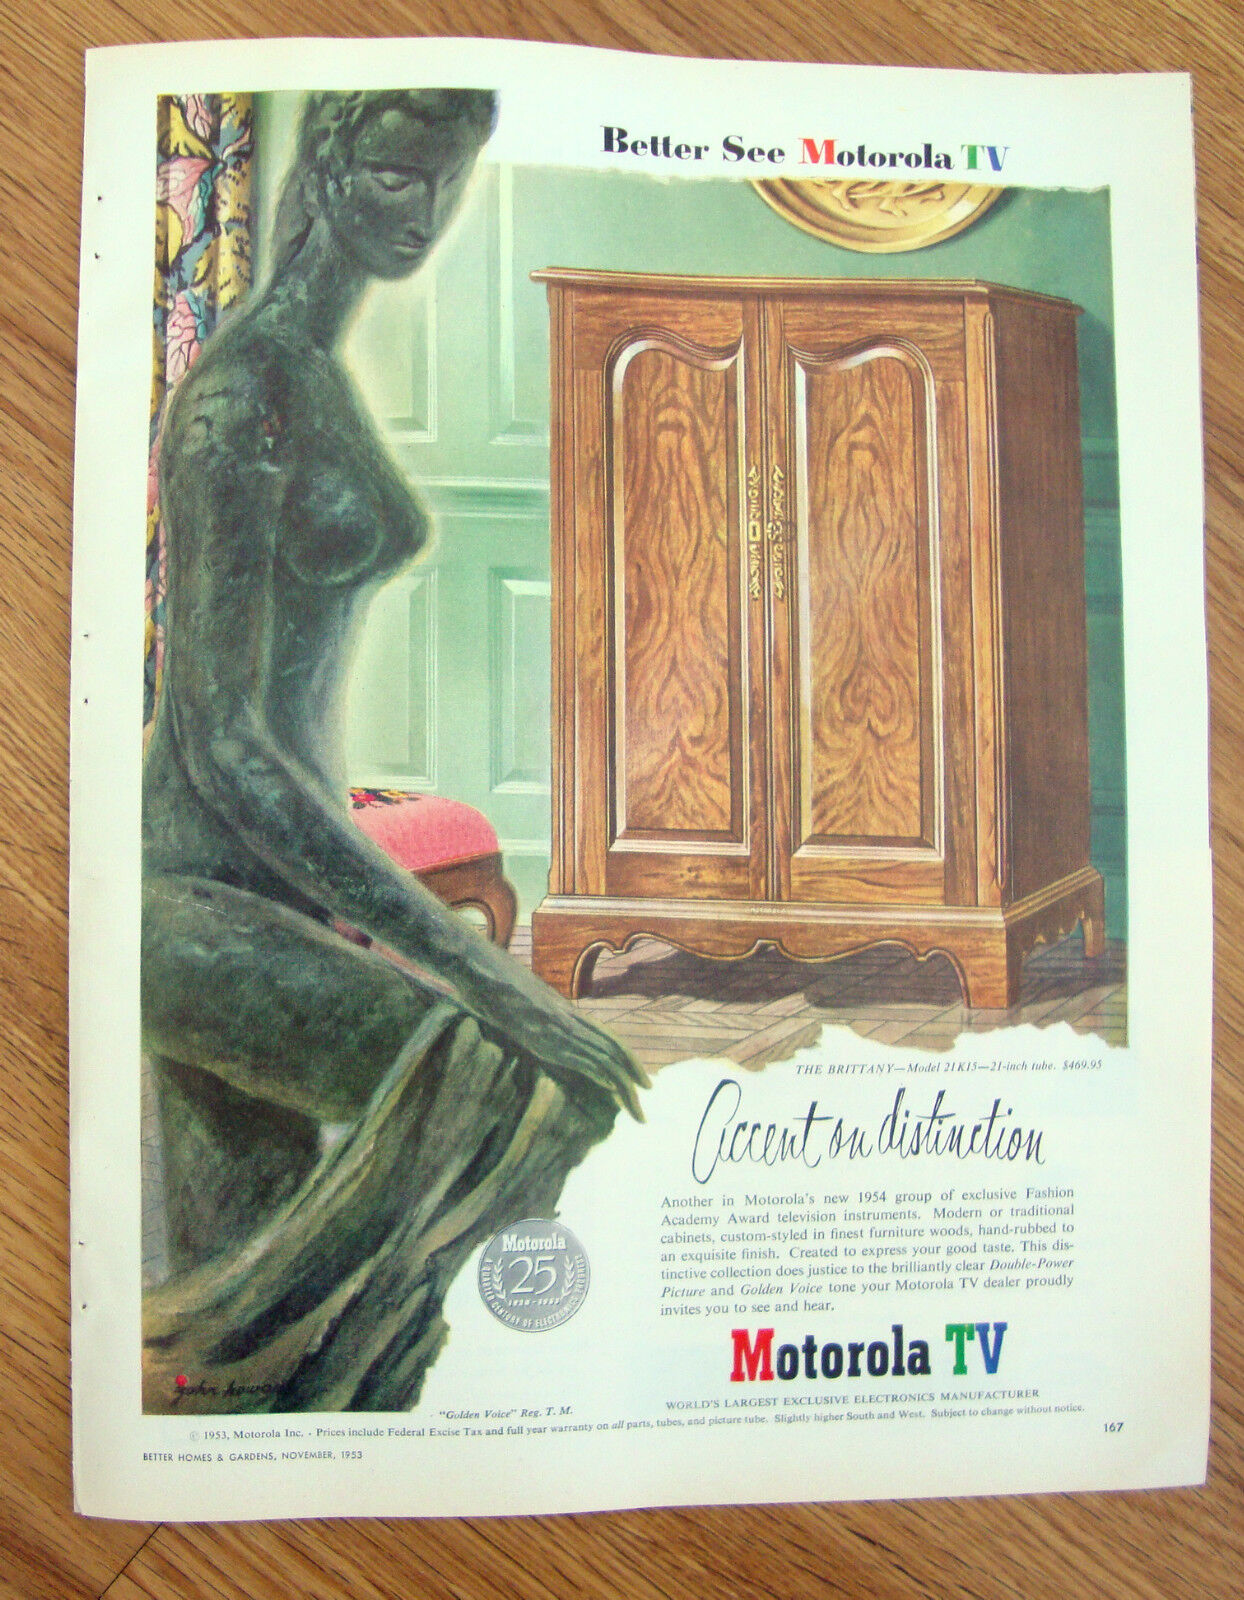 1961 vintage ad for Motola TV, illustrated by John C Howard.